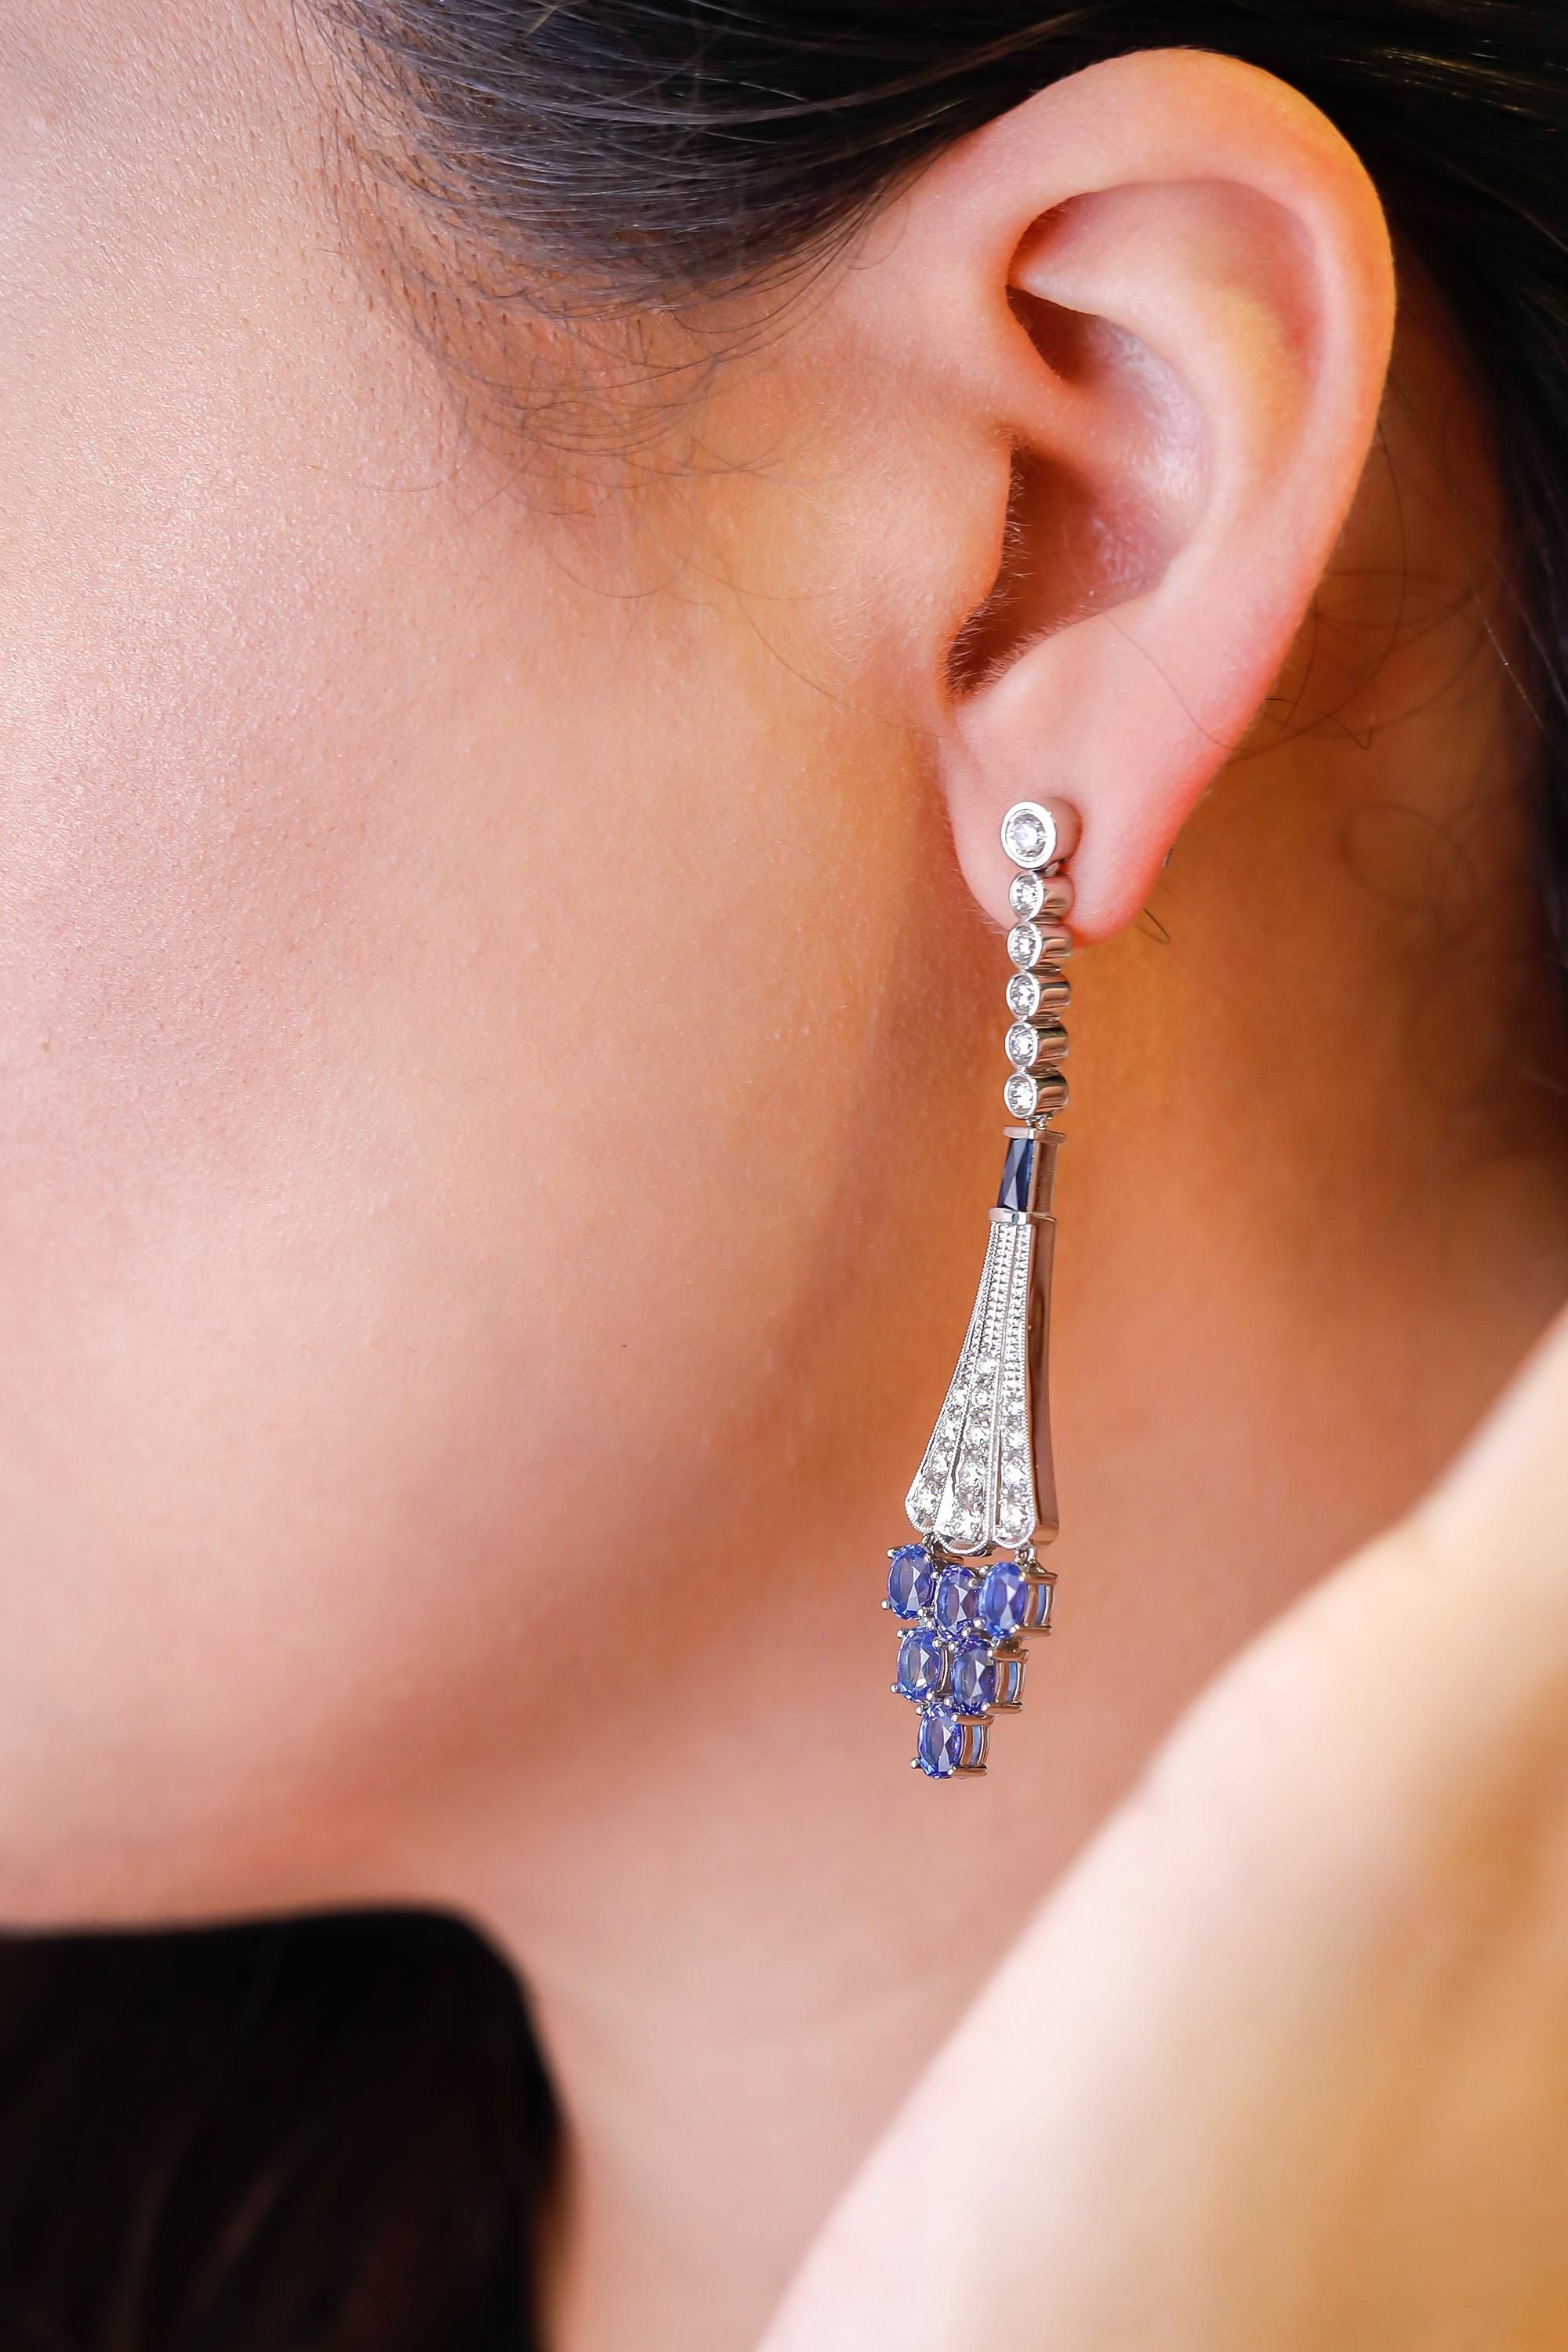 Modern Platinum 5 Carat Oval Cut Blue Sapphire Earrings VS2-SI1/GH Color Diamond Dangle For Sale